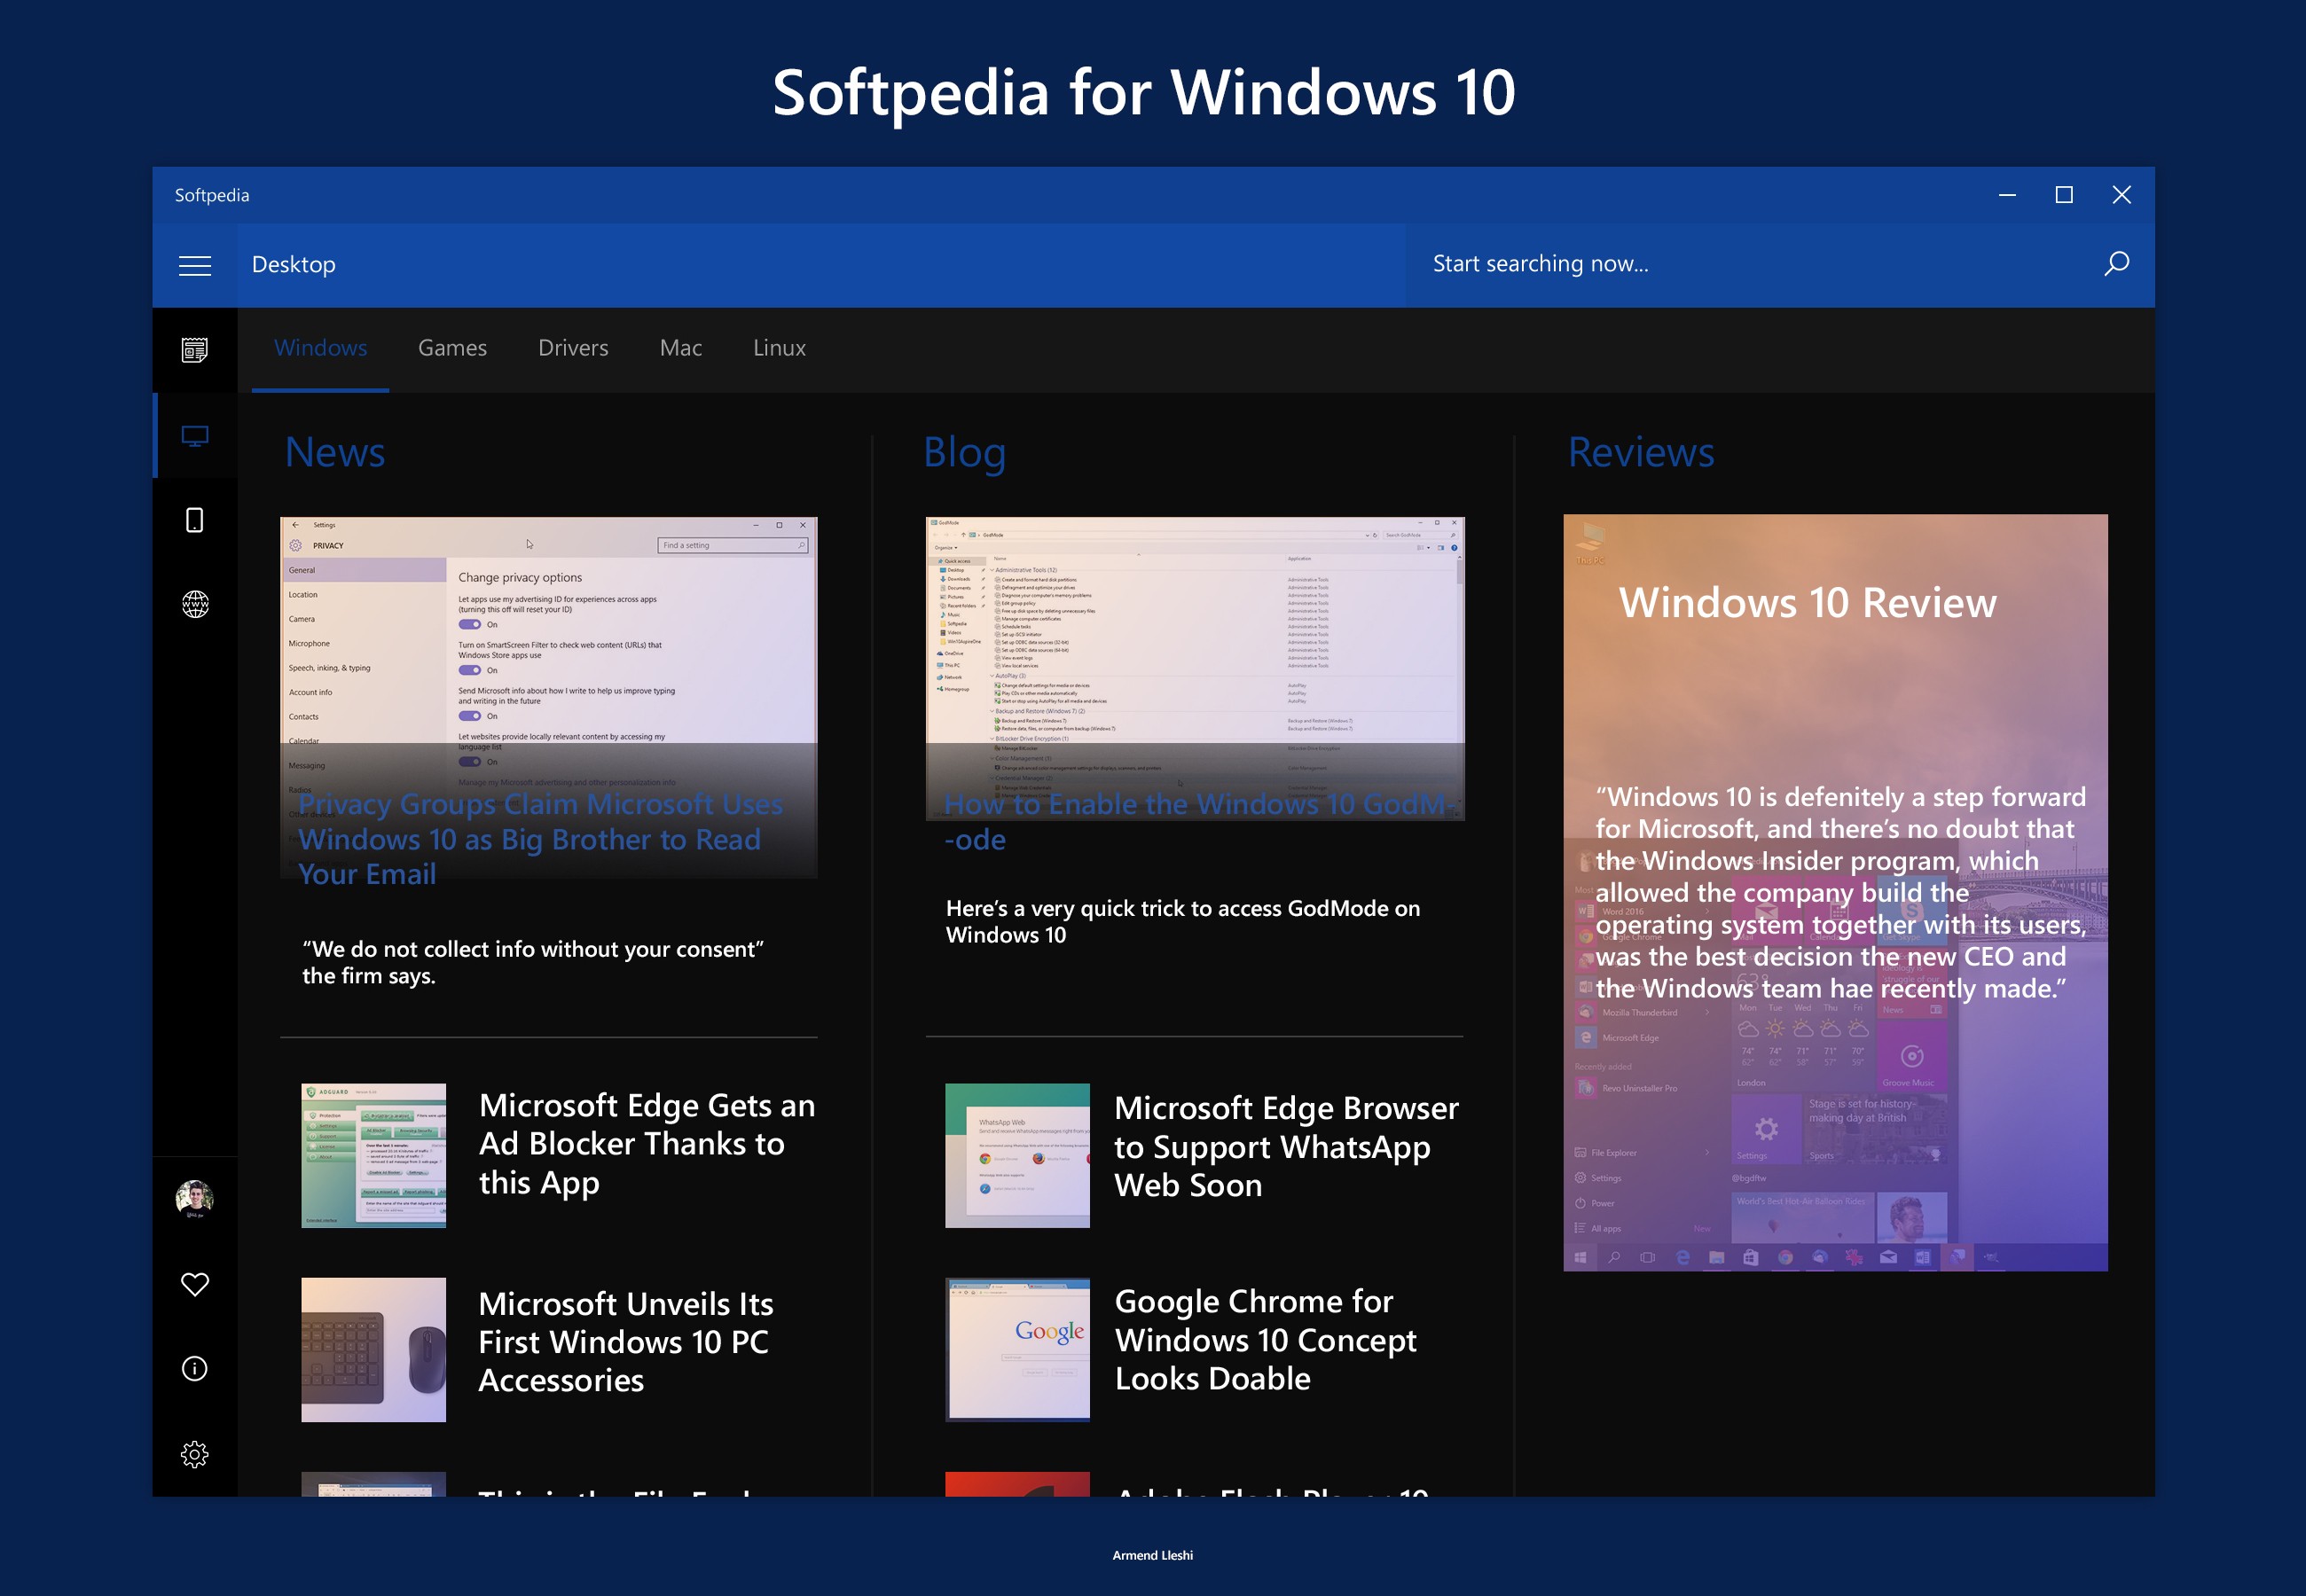 Softpedia Windows 10 App Concept Looks Yummy